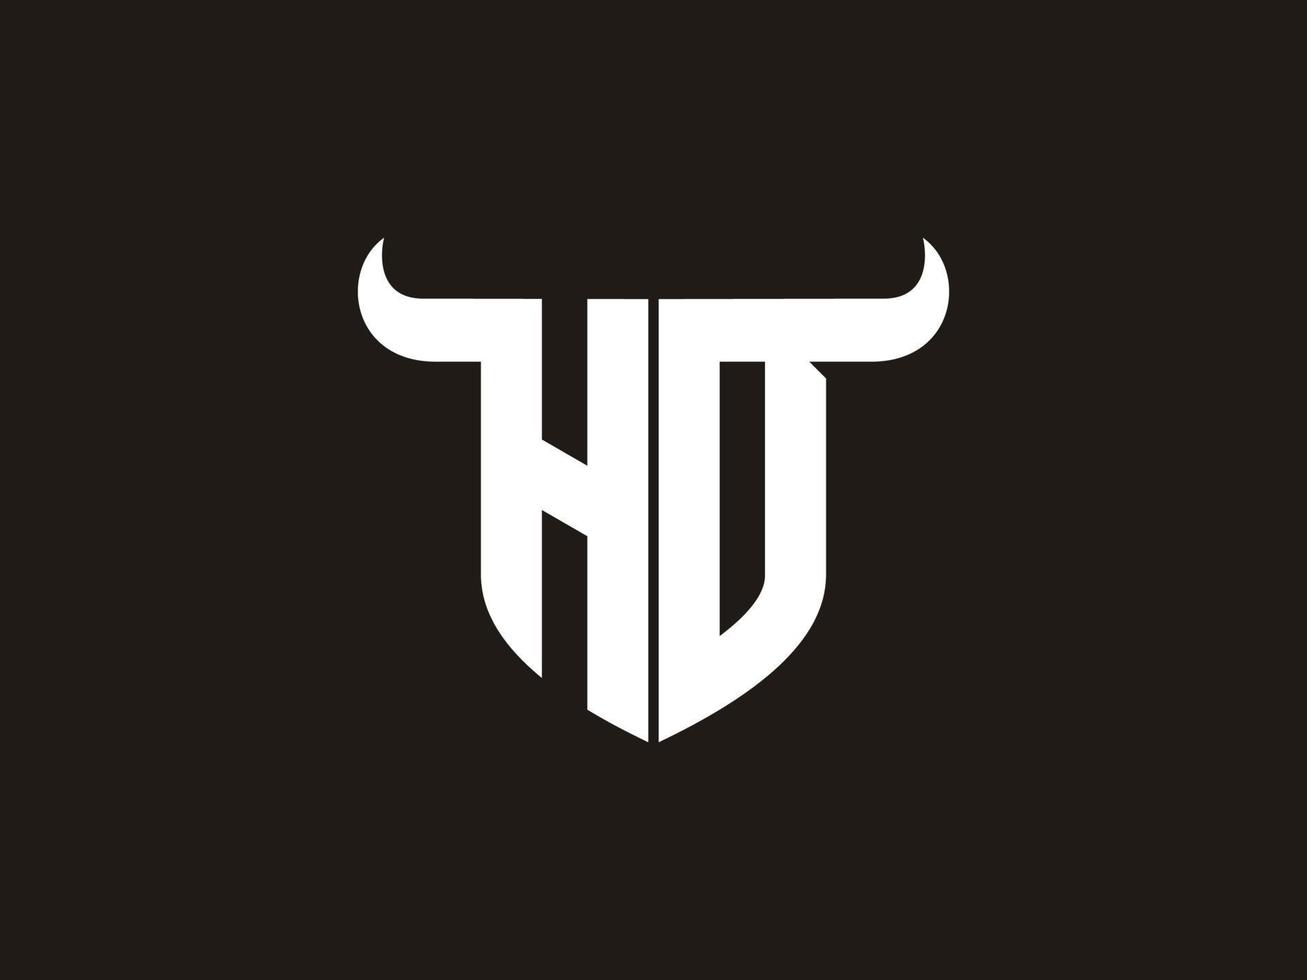 diseño inicial del logo del toro hd. vector